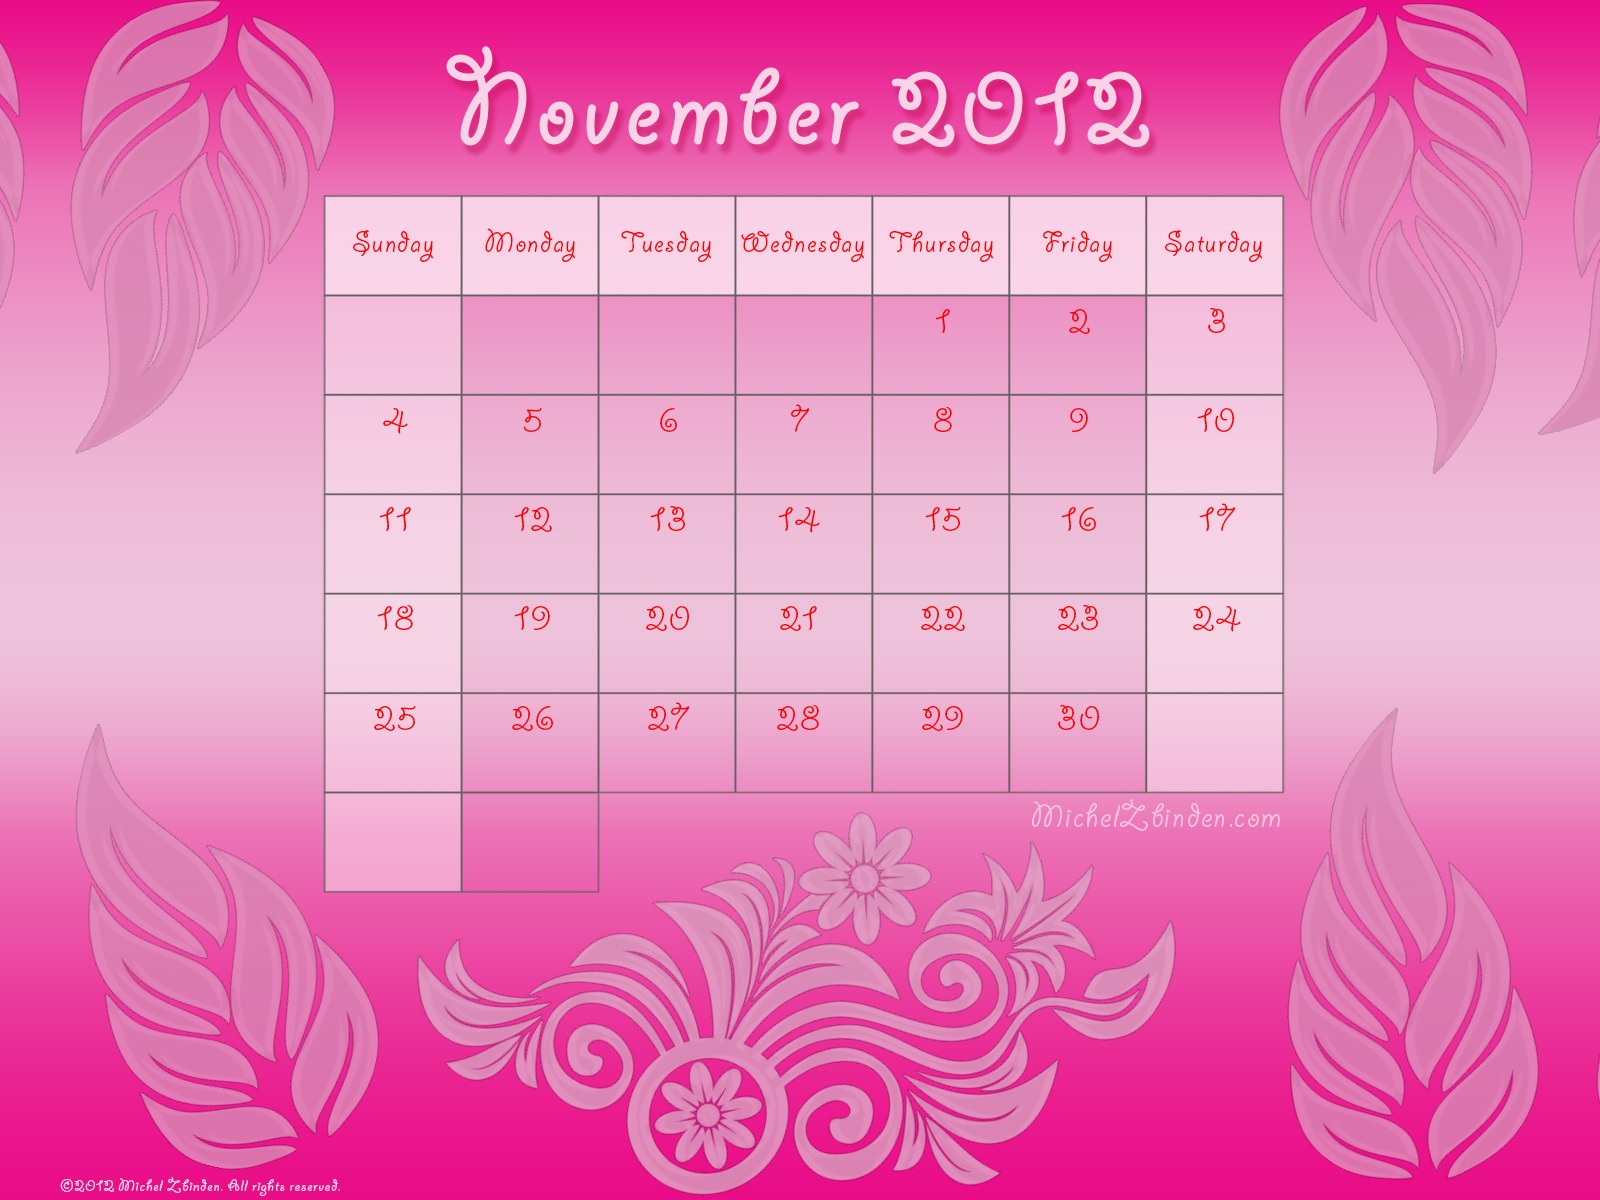 November 2012 Calendar wallpaper (1) #3 - 1600x1200